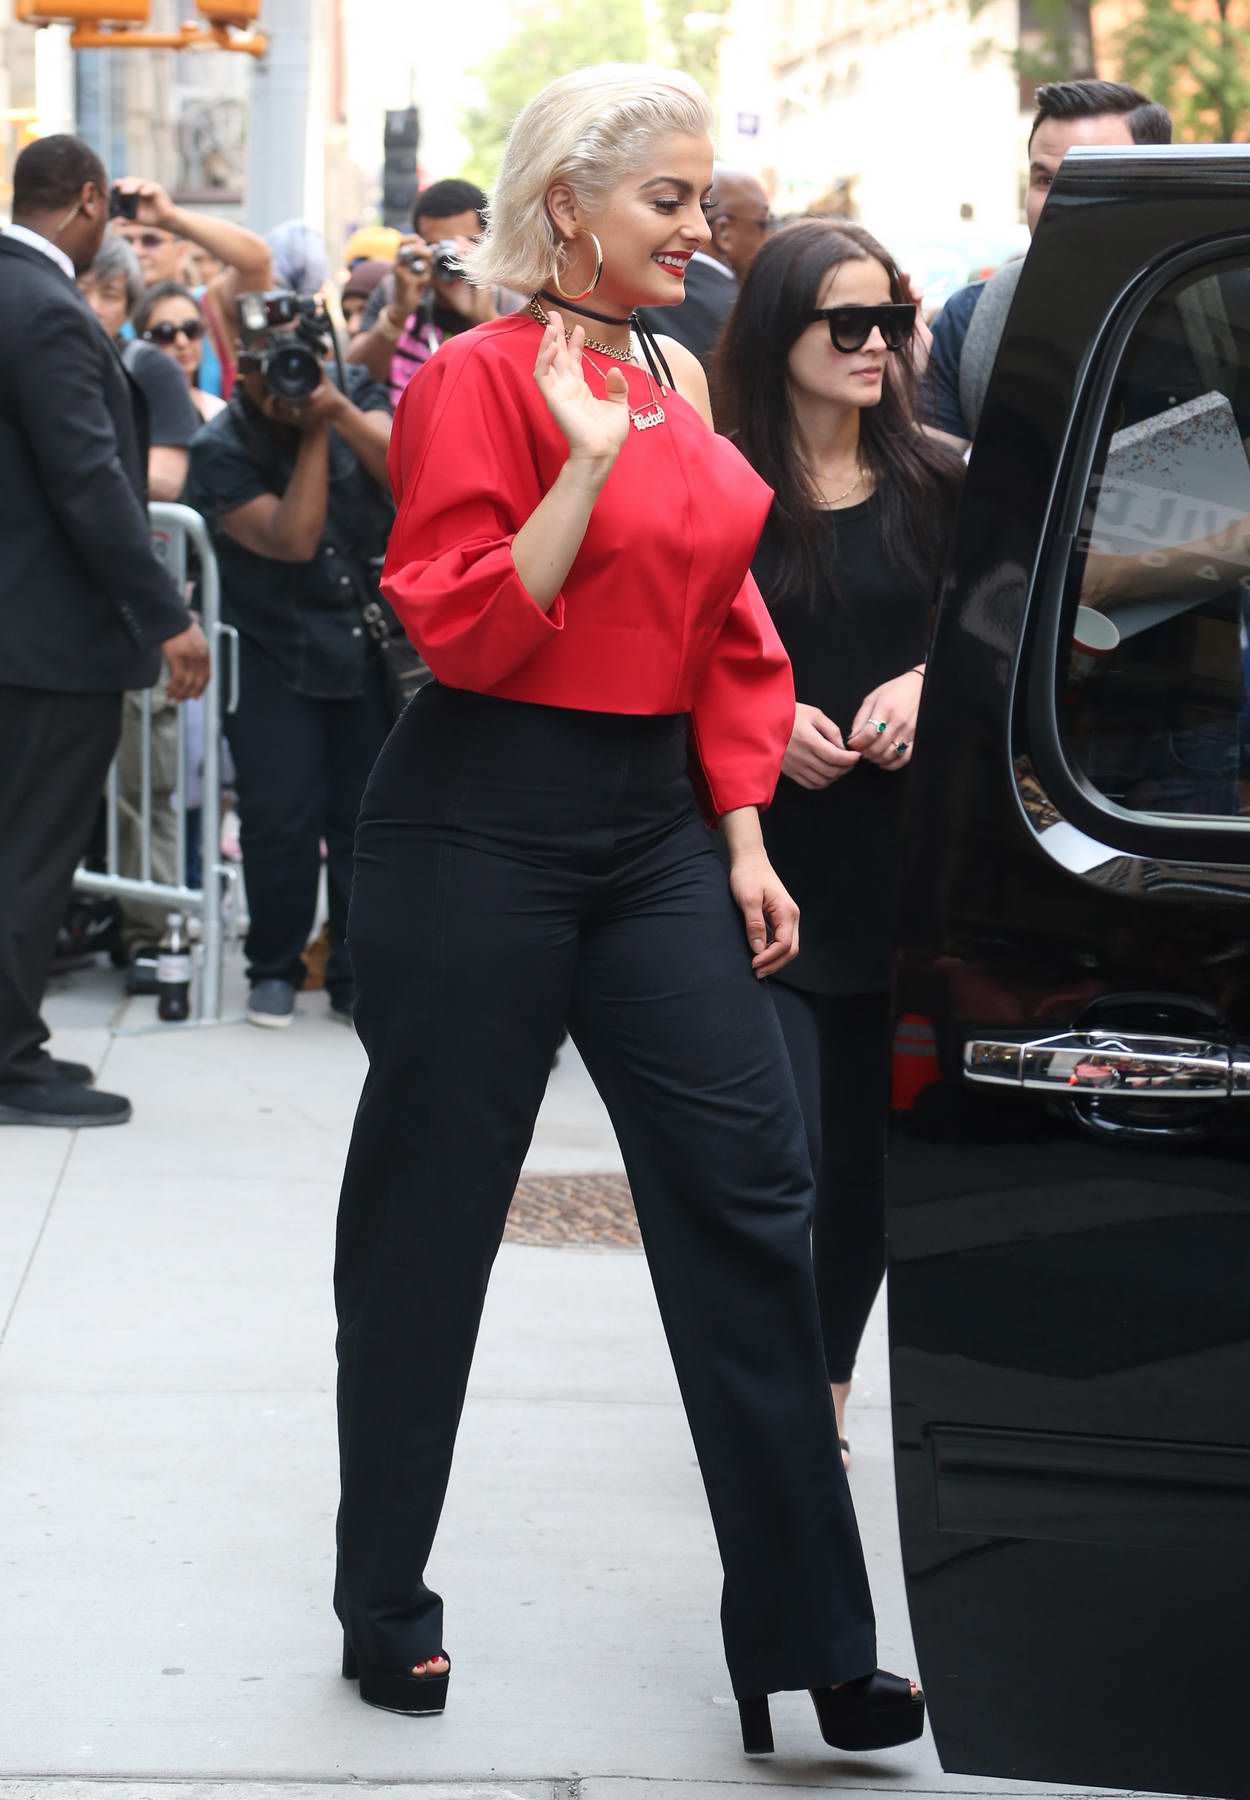 Gigi Hadid looks radiant in a denim shirt and black leggings as